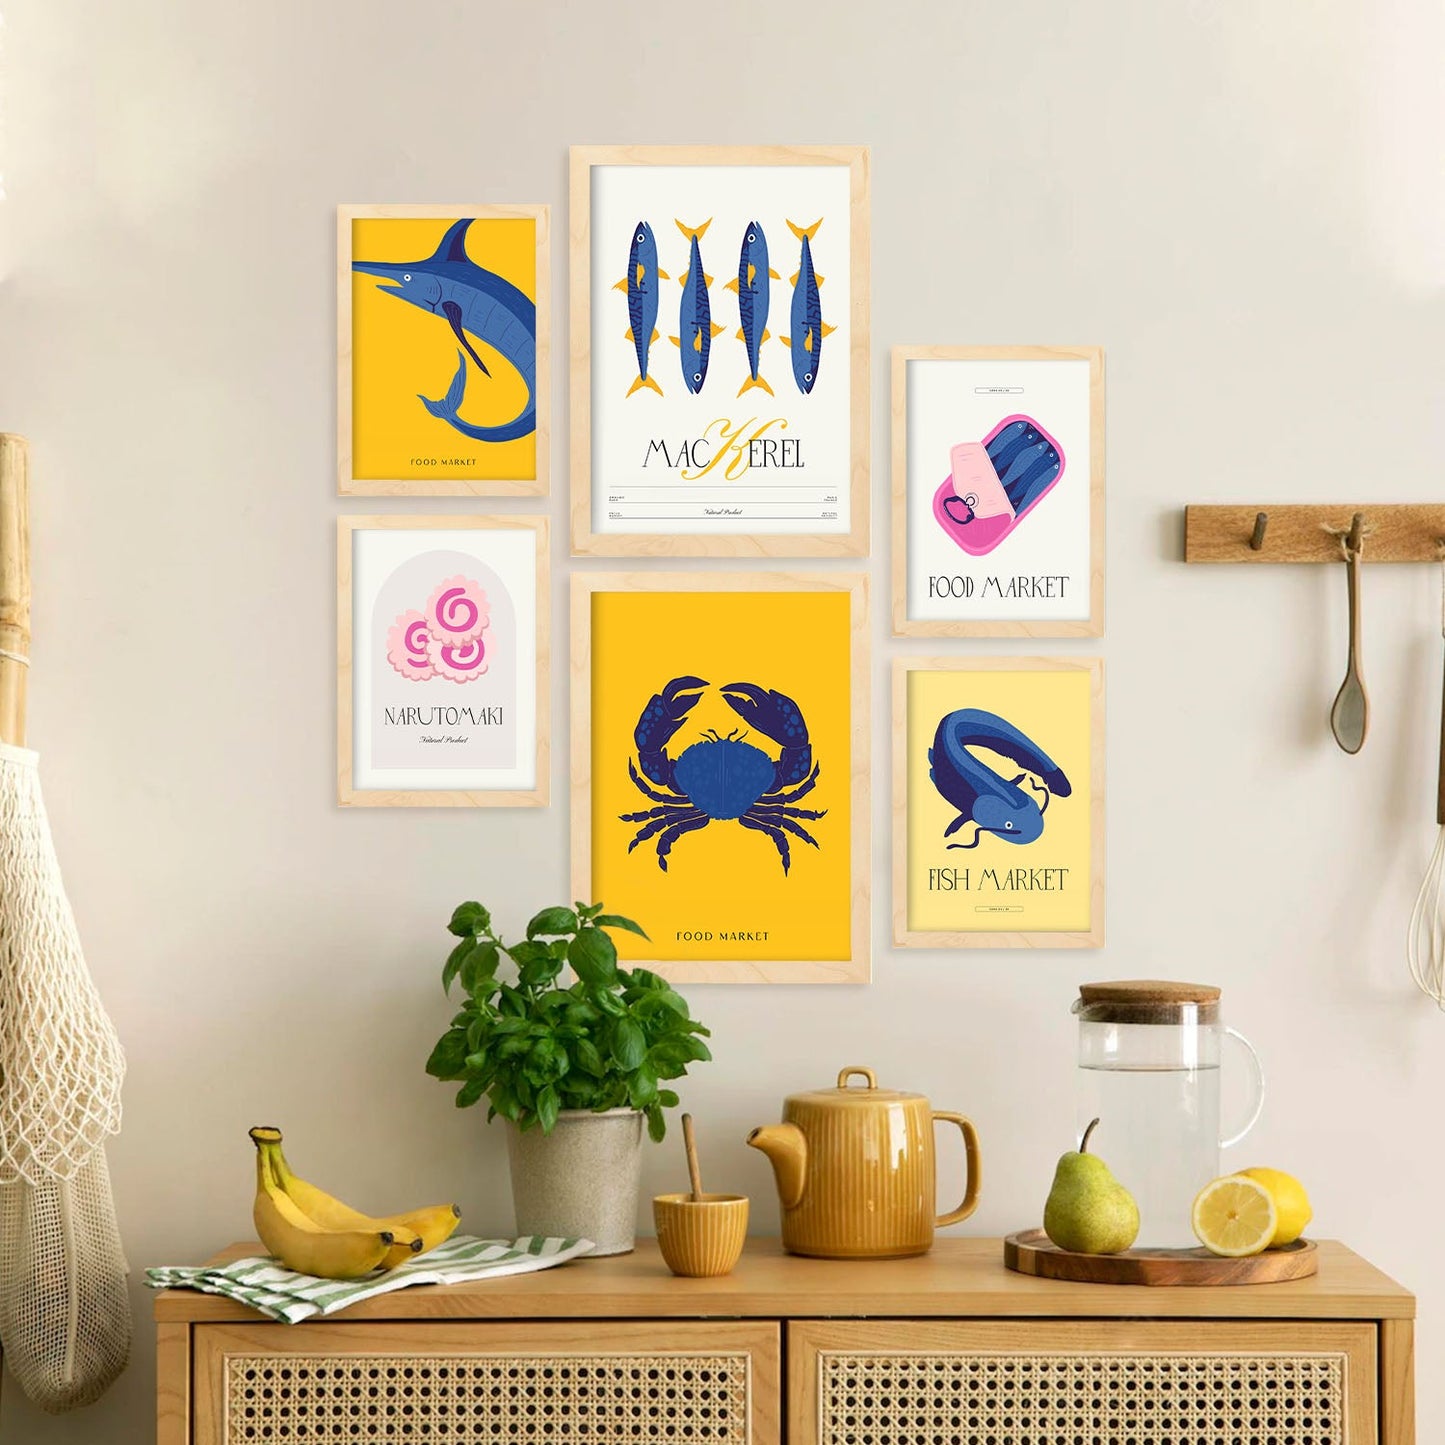 Food and Plants Posters. Seafood Produce. Nature and Botany-Artwork-Nacnic-Nacnic Estudio SL